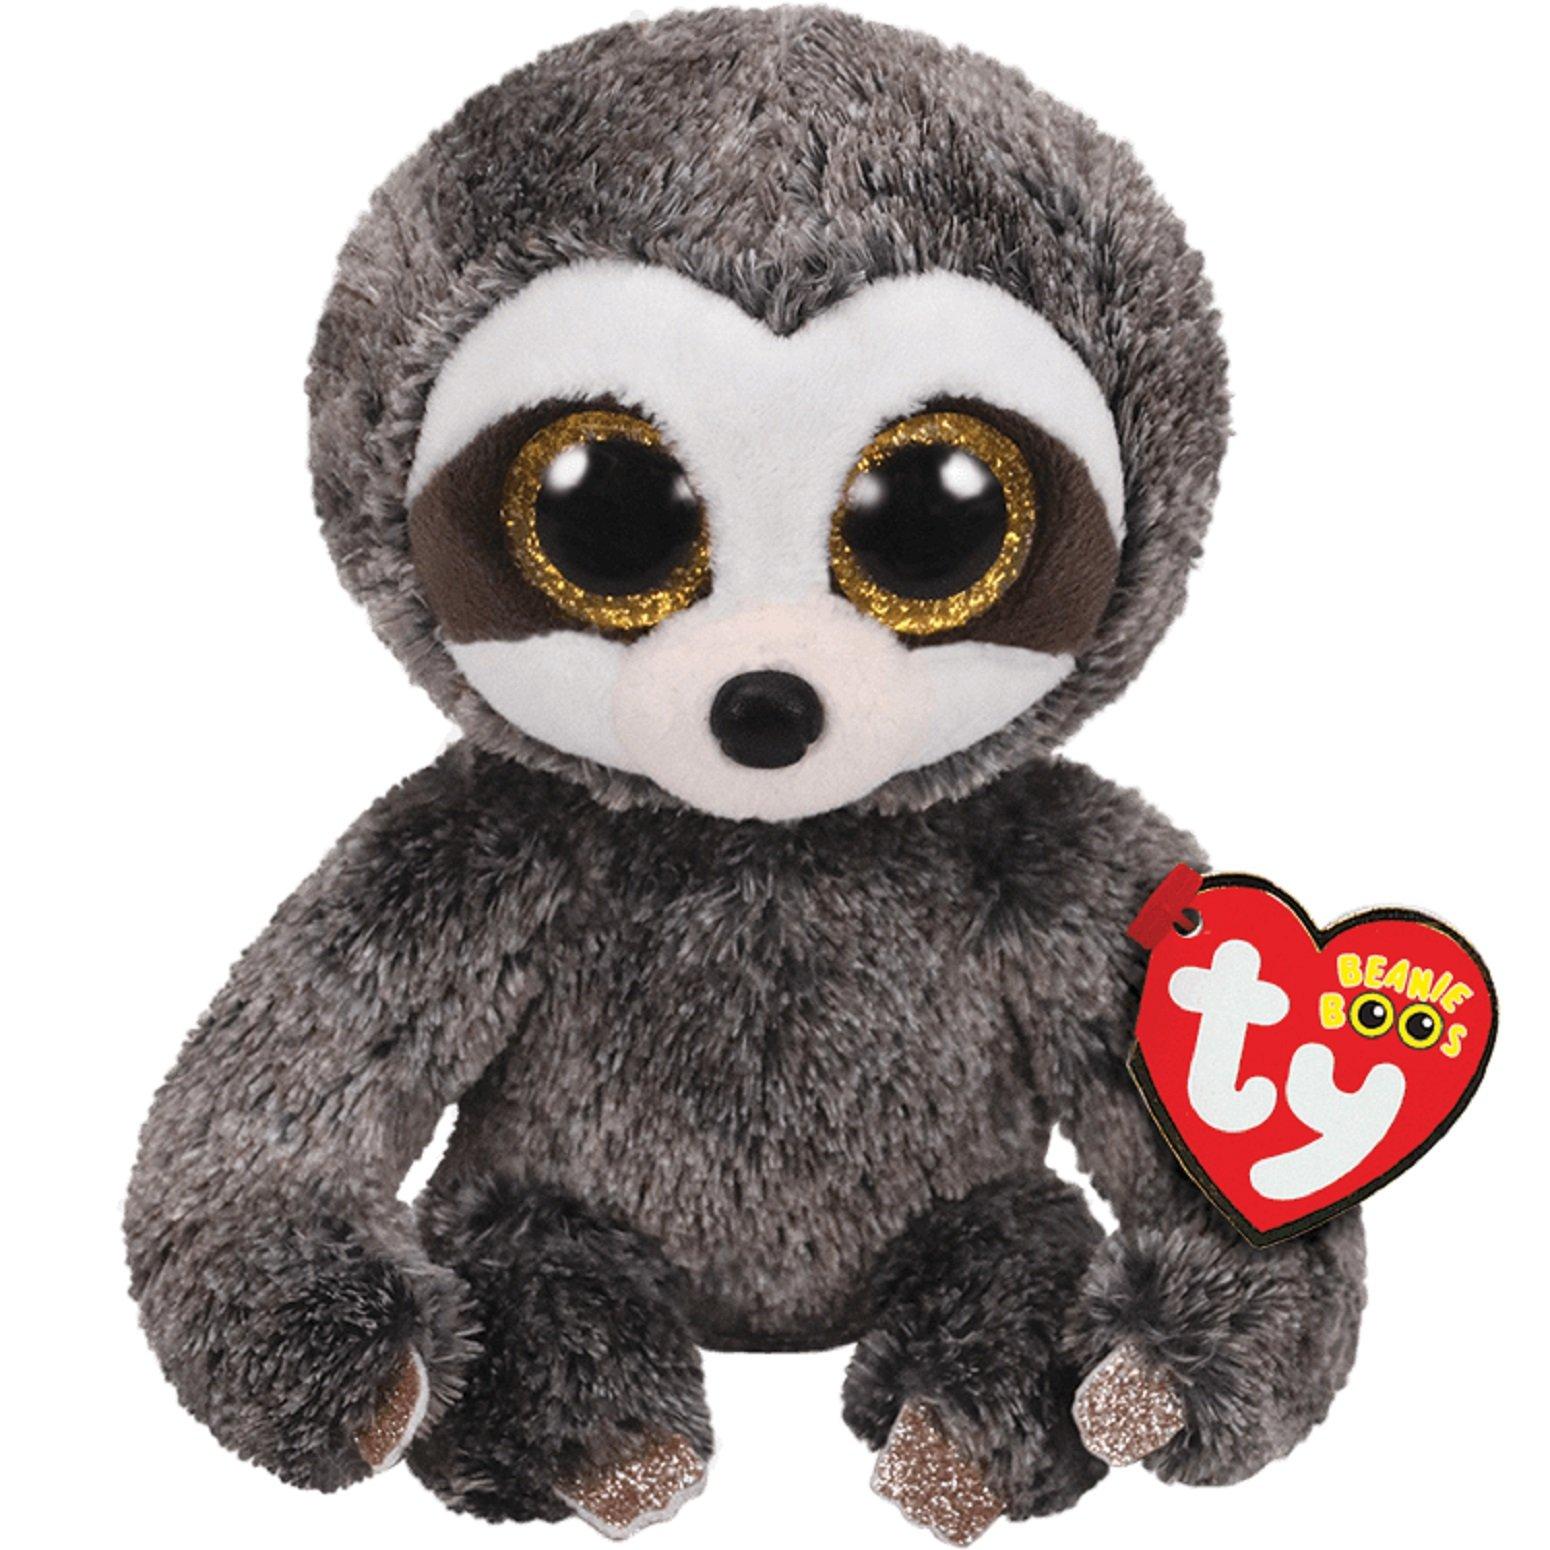 Beanie Brown Sloth Plush Toy | GameStop